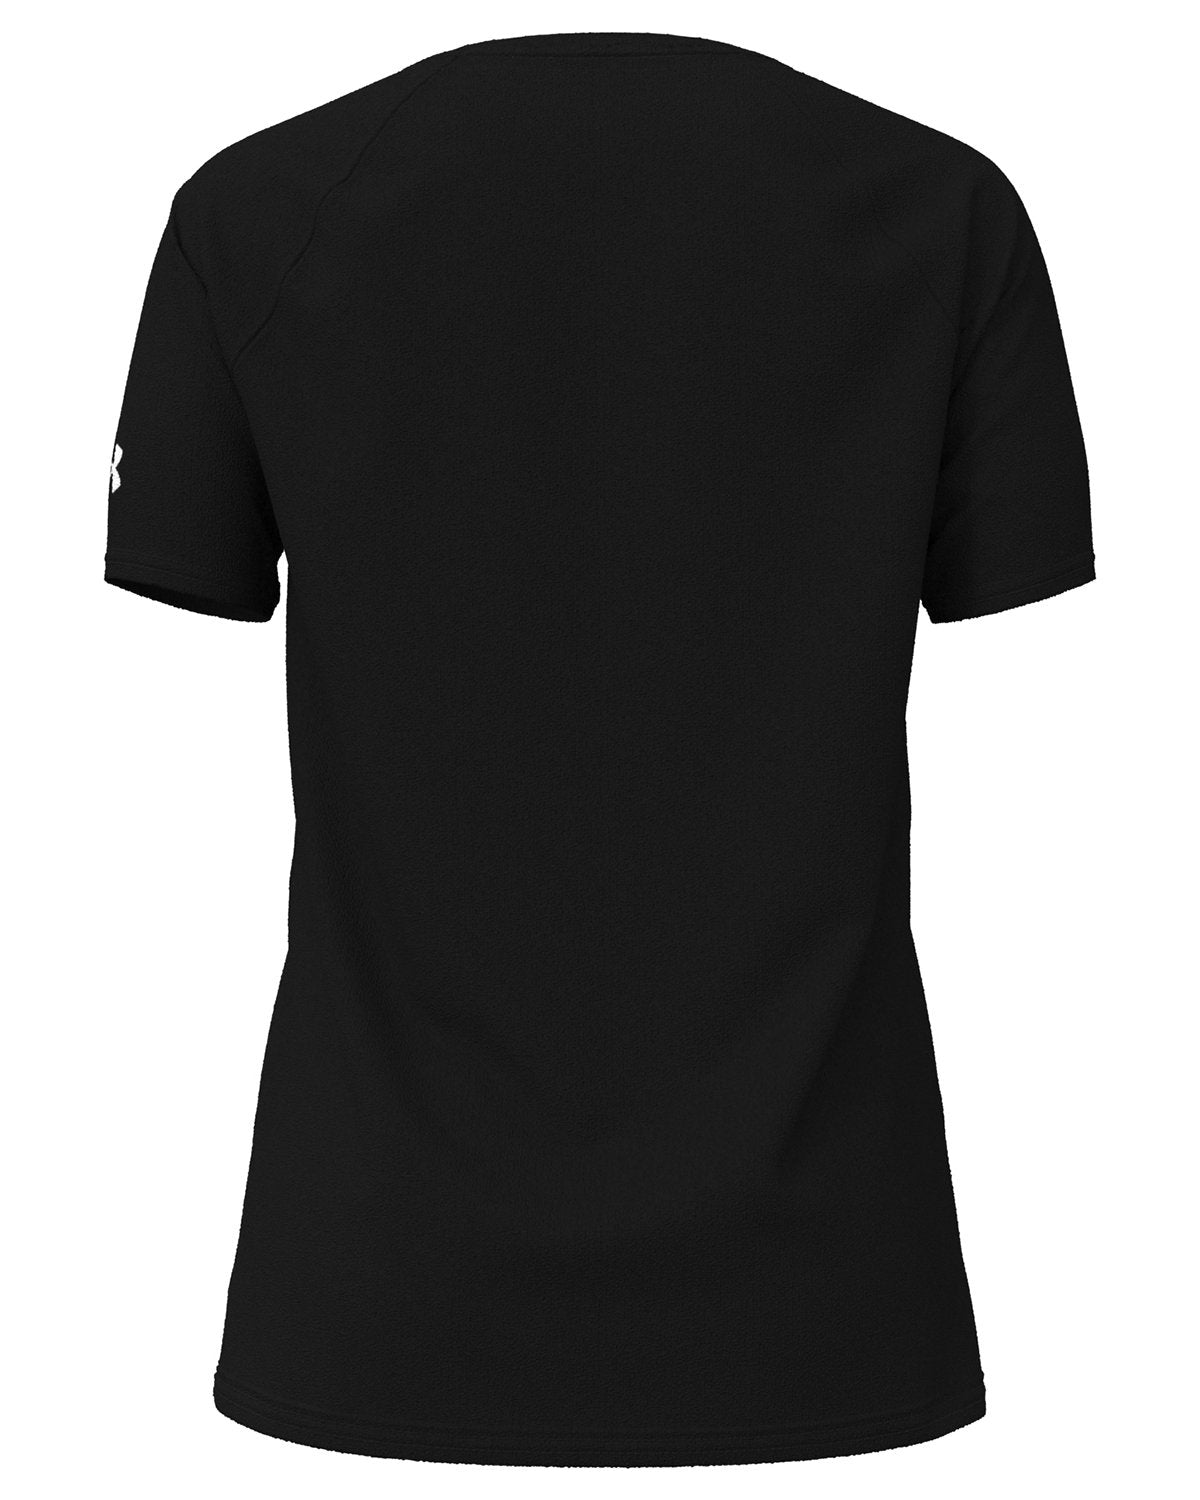 Under Armour Ladies Athletics Customized T-Shirts, Black